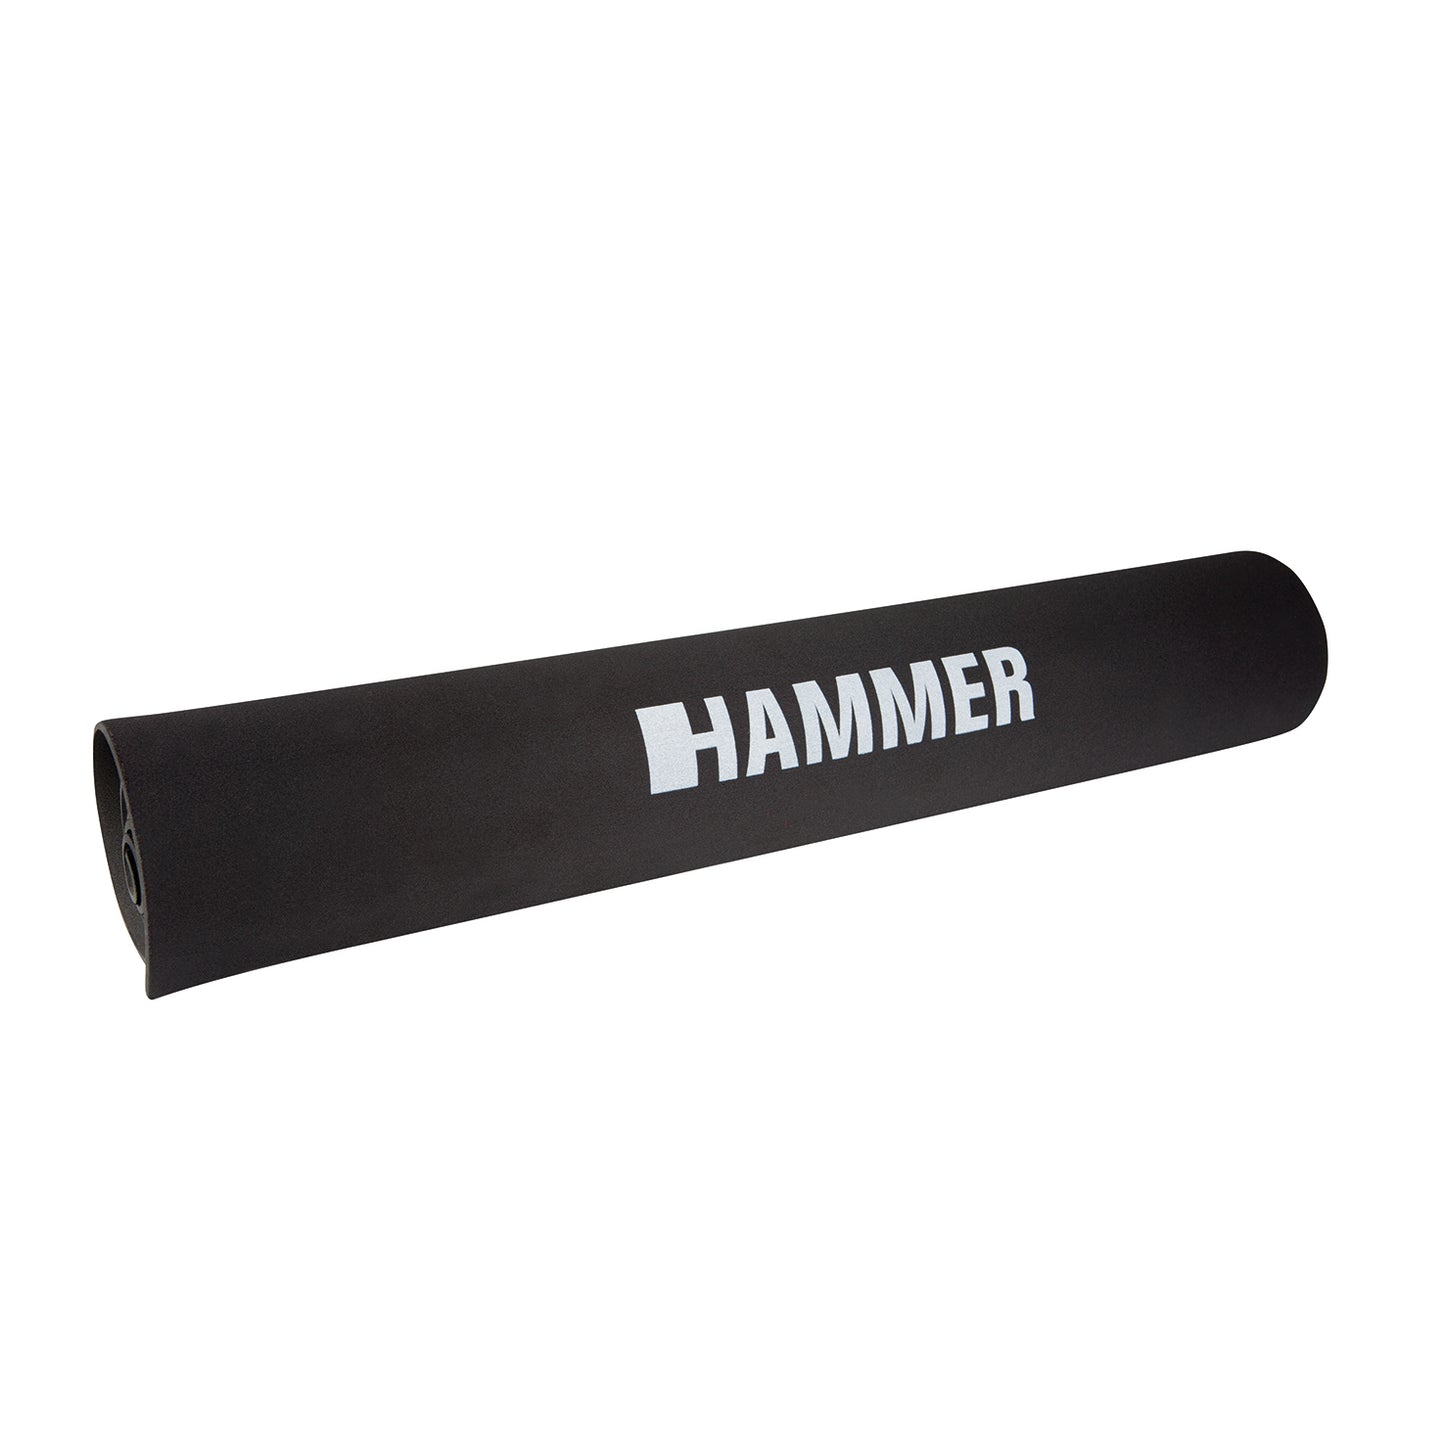 Protector Alfombra Hammer 60x120cm - Sportech fitness